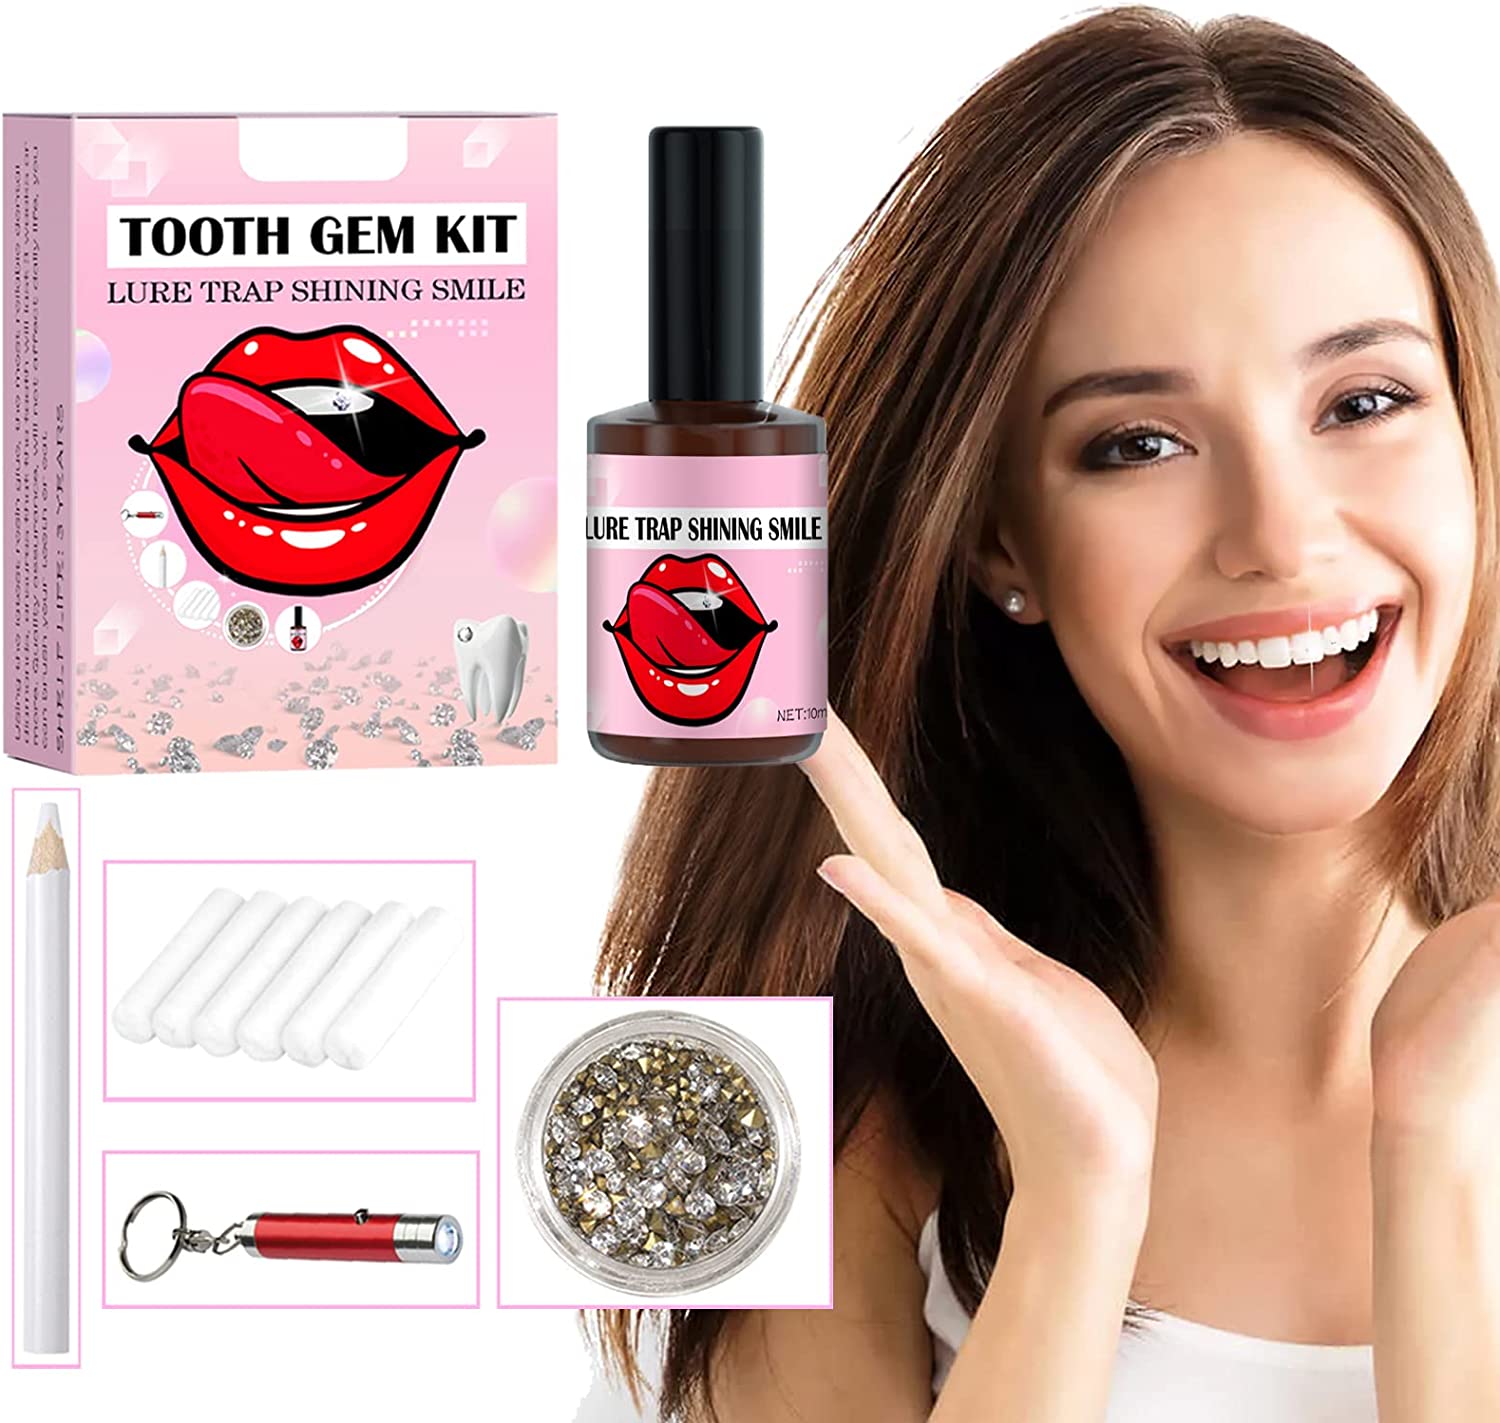  Tooth Gem Kit - Professional Tooth Gem Kit - Bundle